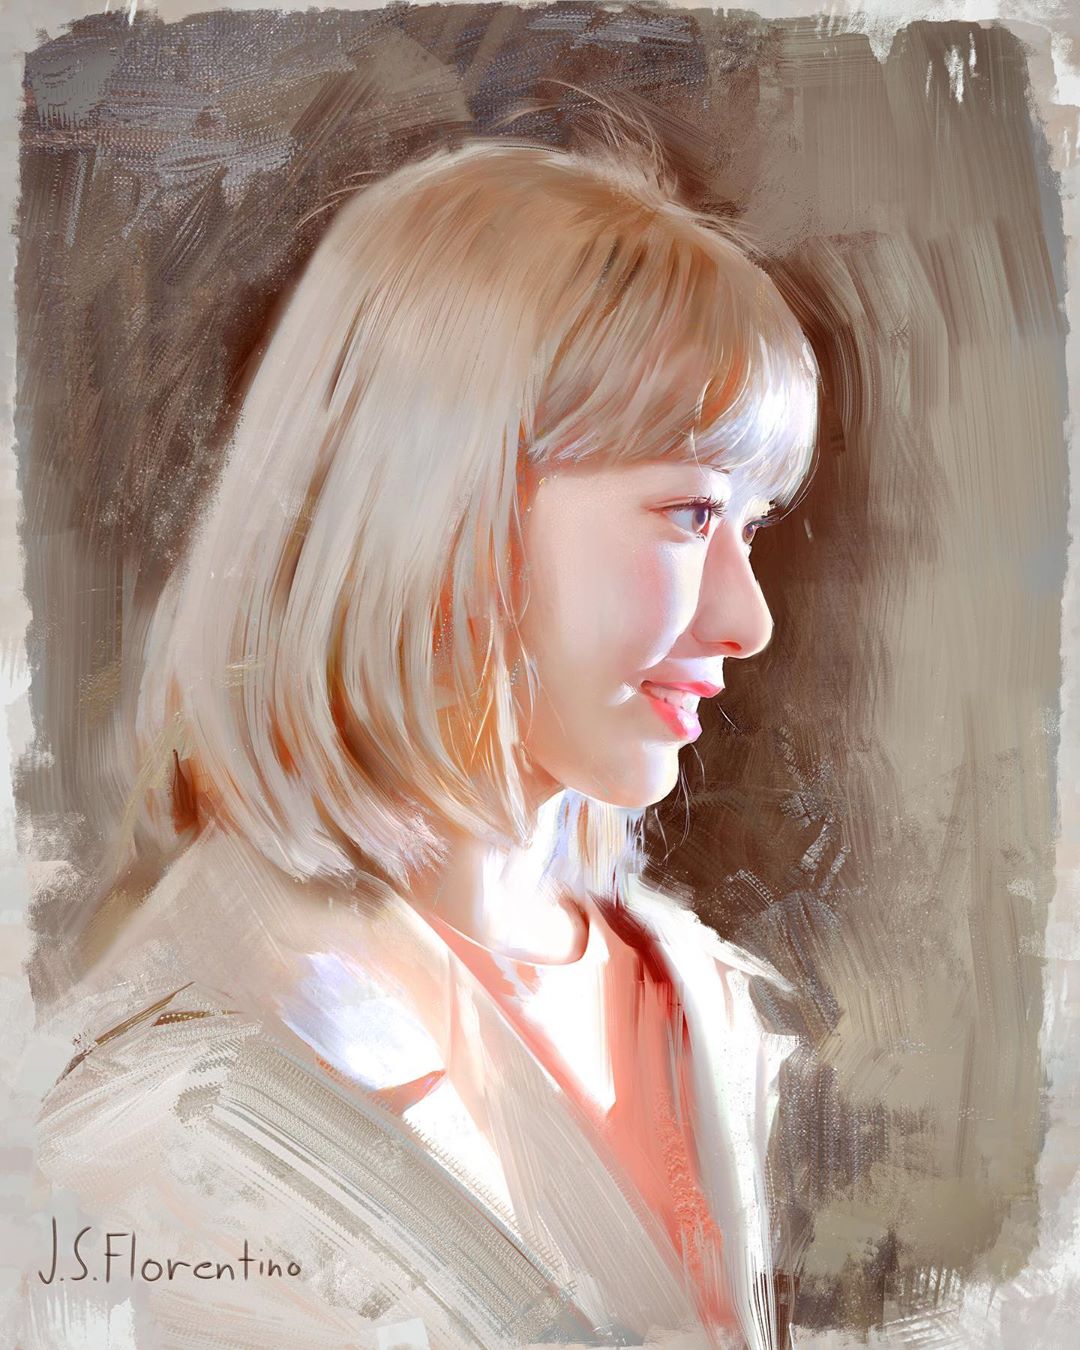 Justine Florentino美丽的人物肖像插画